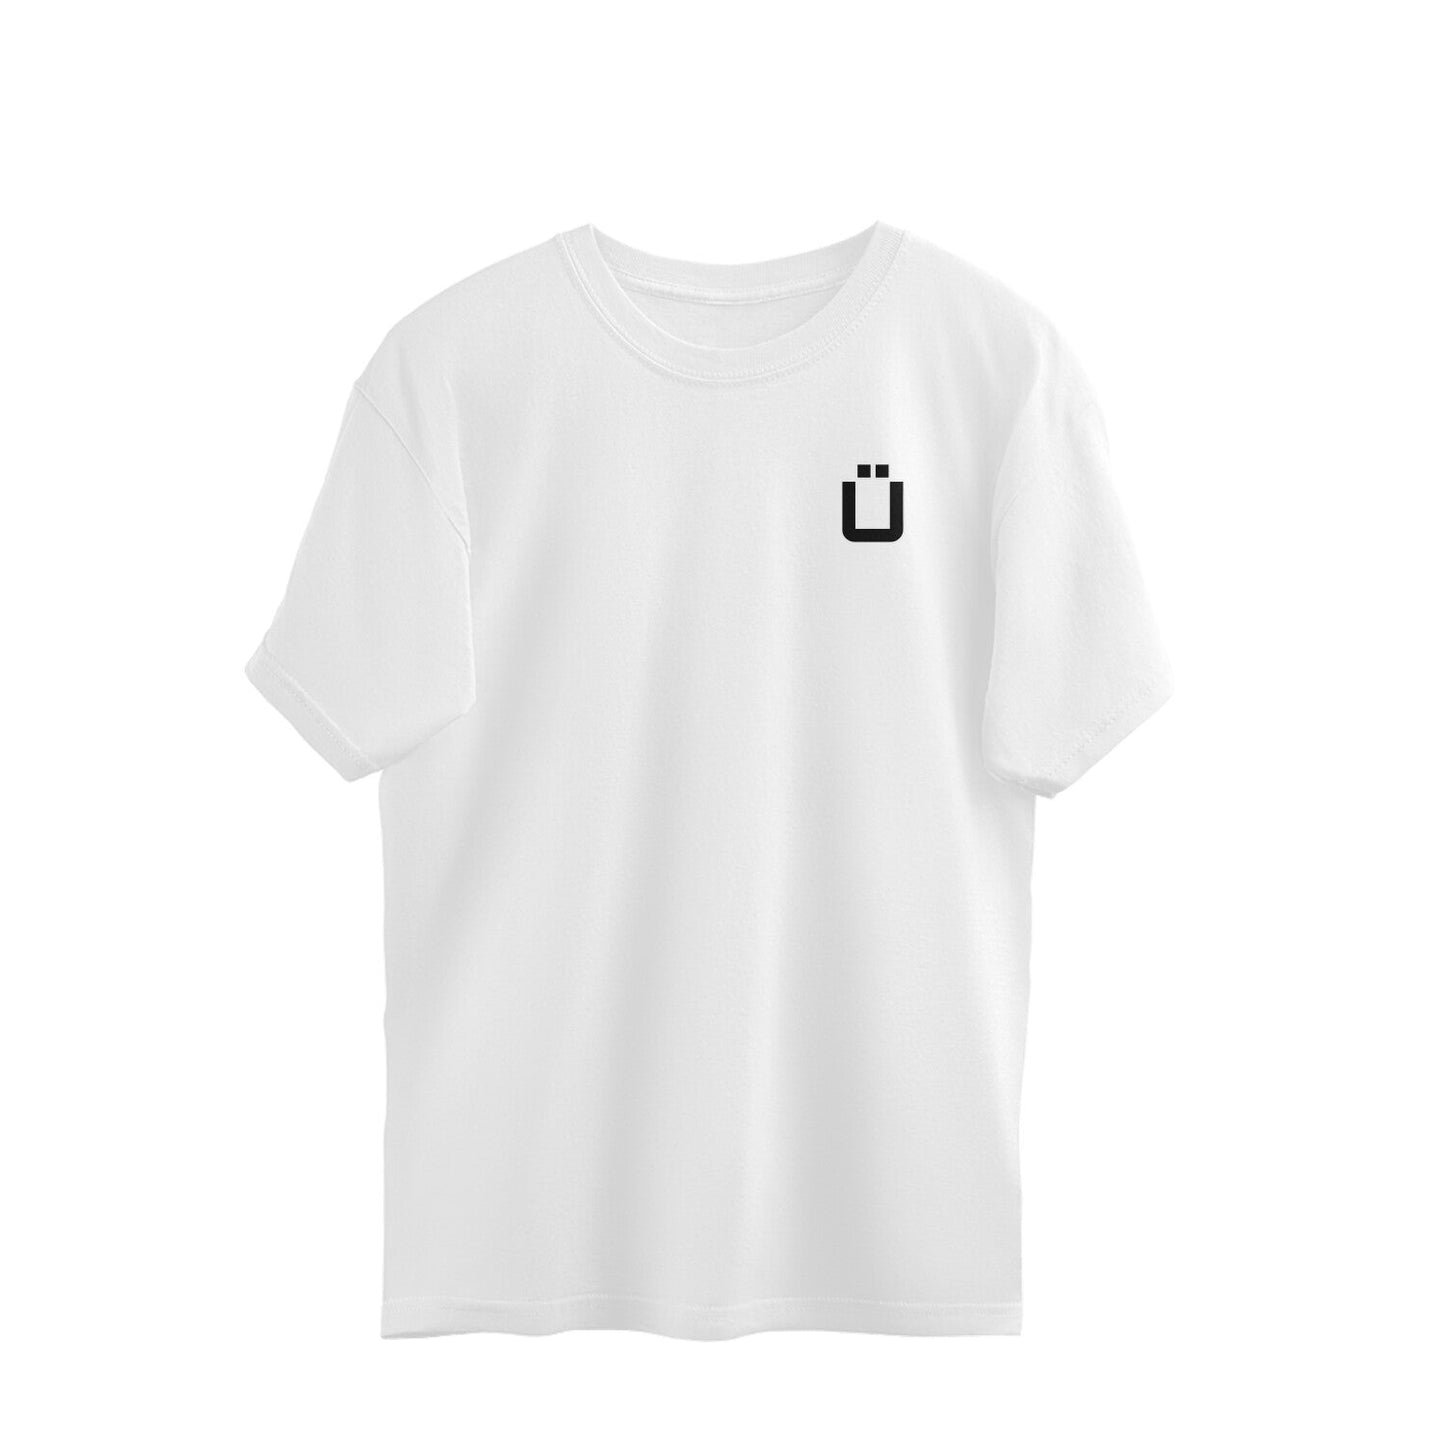 Death Note - Ryuk "Humans Are So Interesting" - Oversized T shirt - Kashiba Store